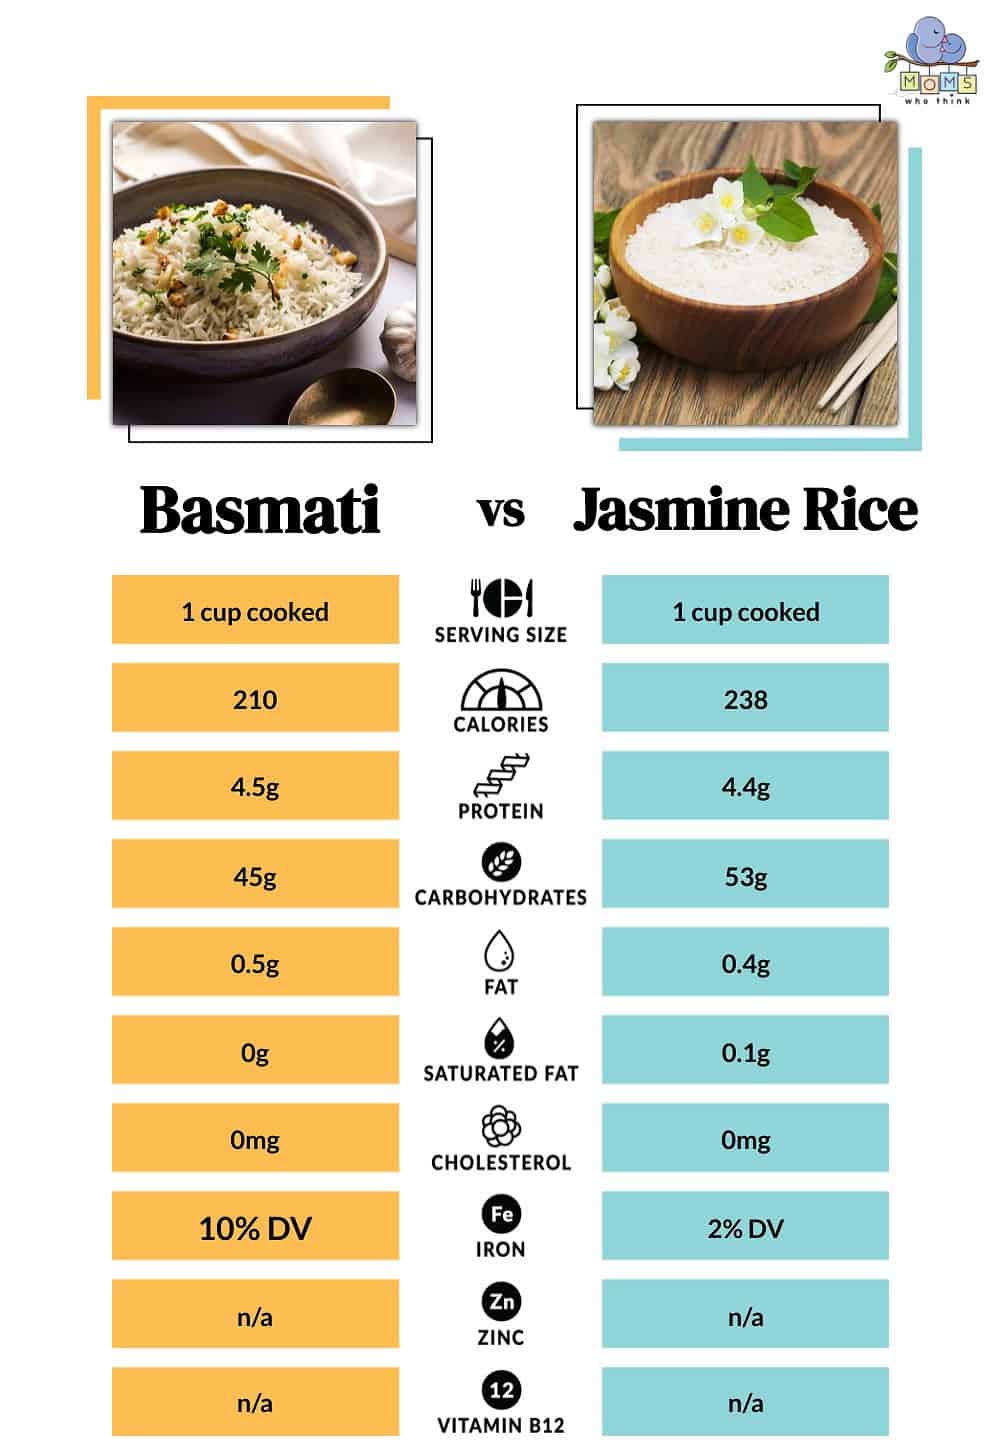 Basmati vs Jasmine Rice Nutritional Facts